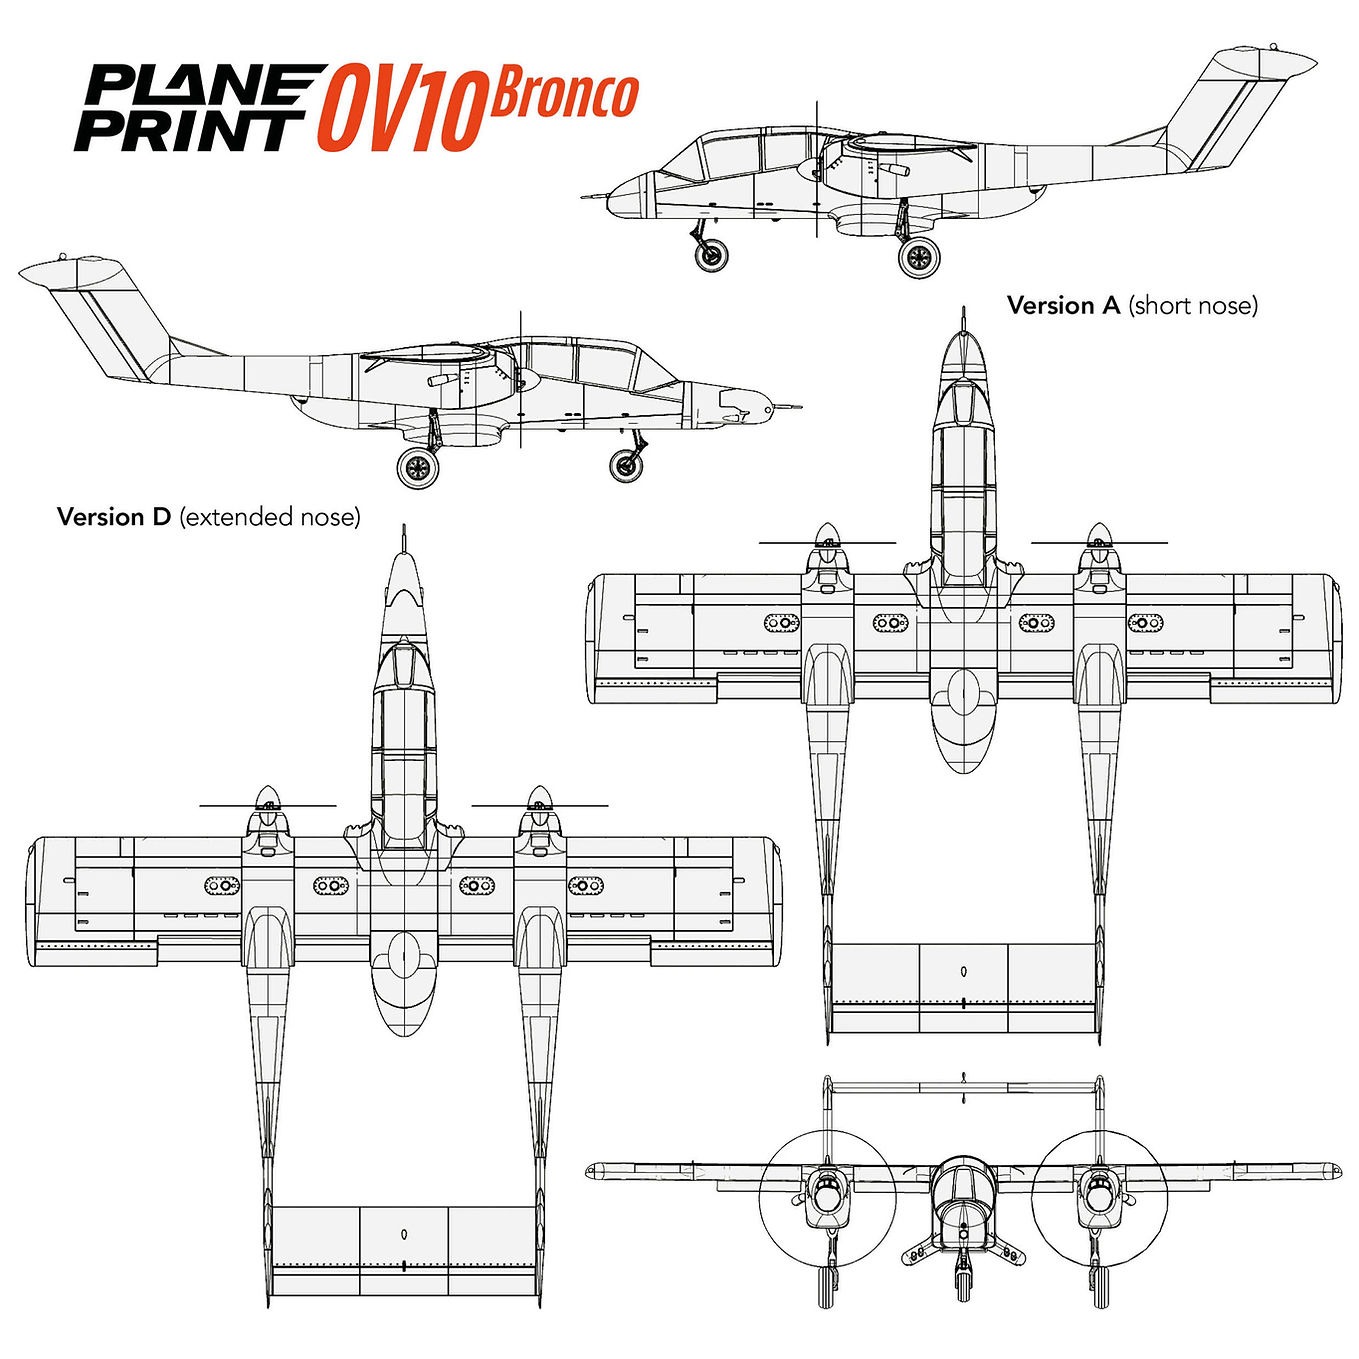 OV-10 Bronco PLANEPRINT